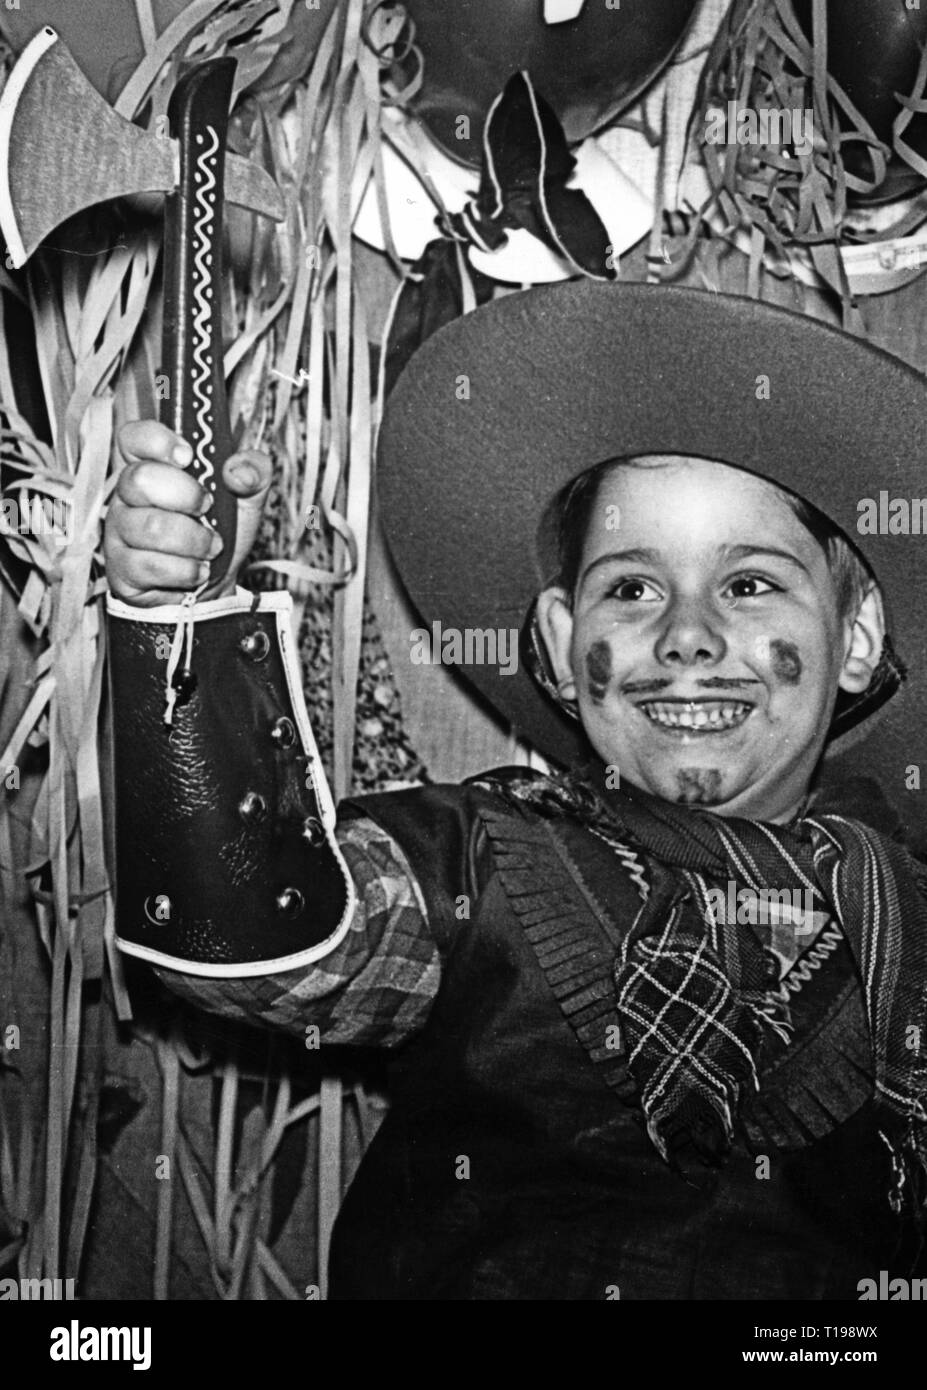 Fiestas, carnaval, joven disfrazado de cowboy, Alemania, 1950-Clearance-Info Additional-Rights-Not-Available Foto de stock